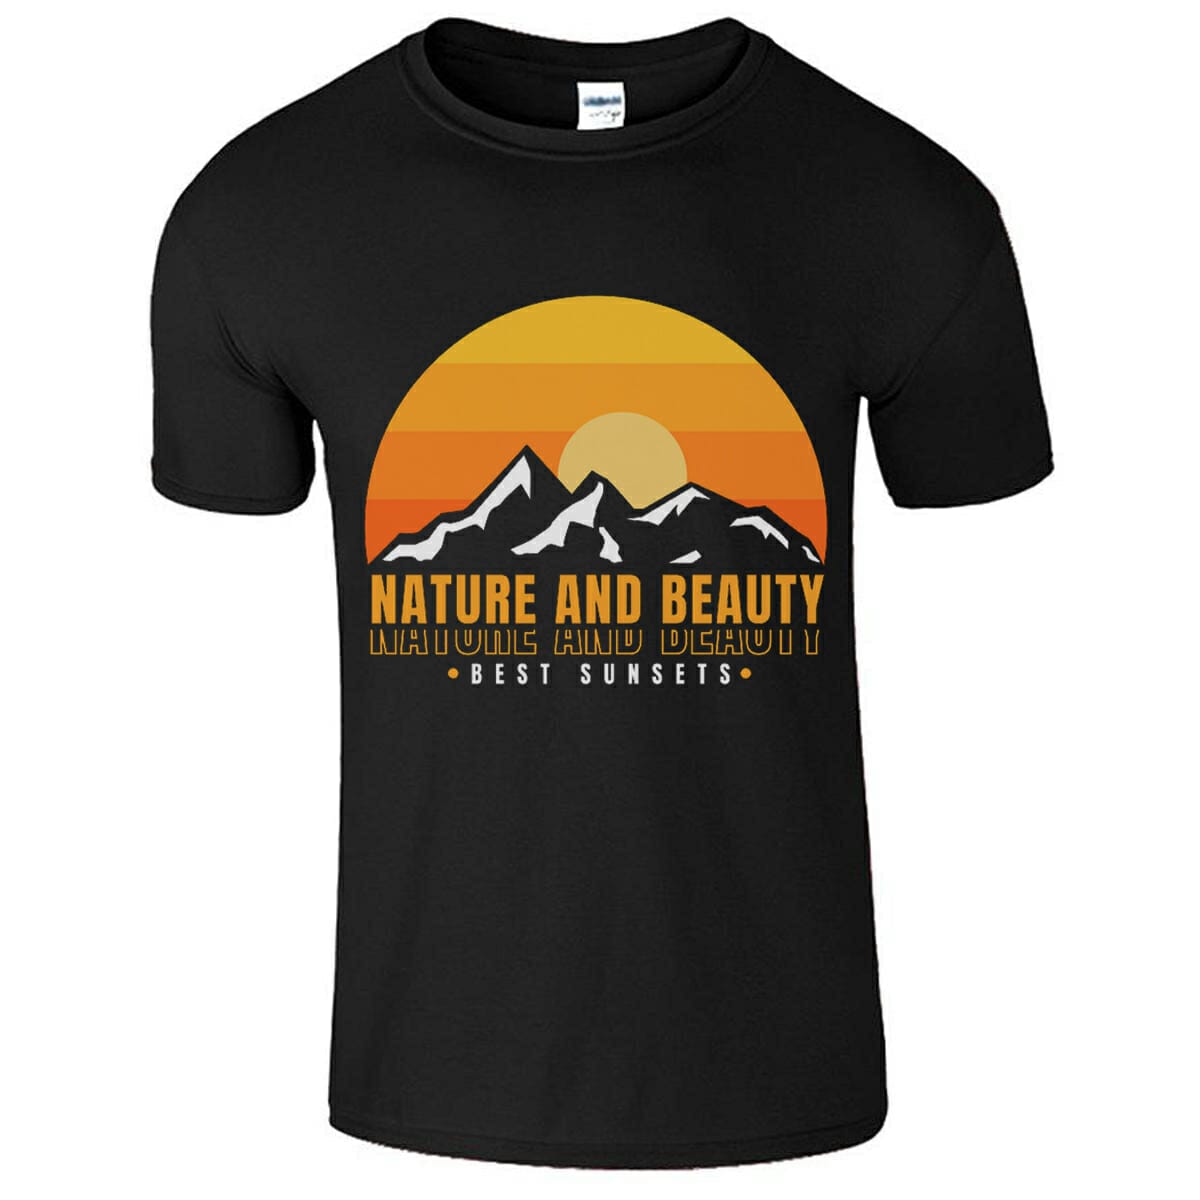 Nature & Beauty Best Sunsets Free T-Shirt Design